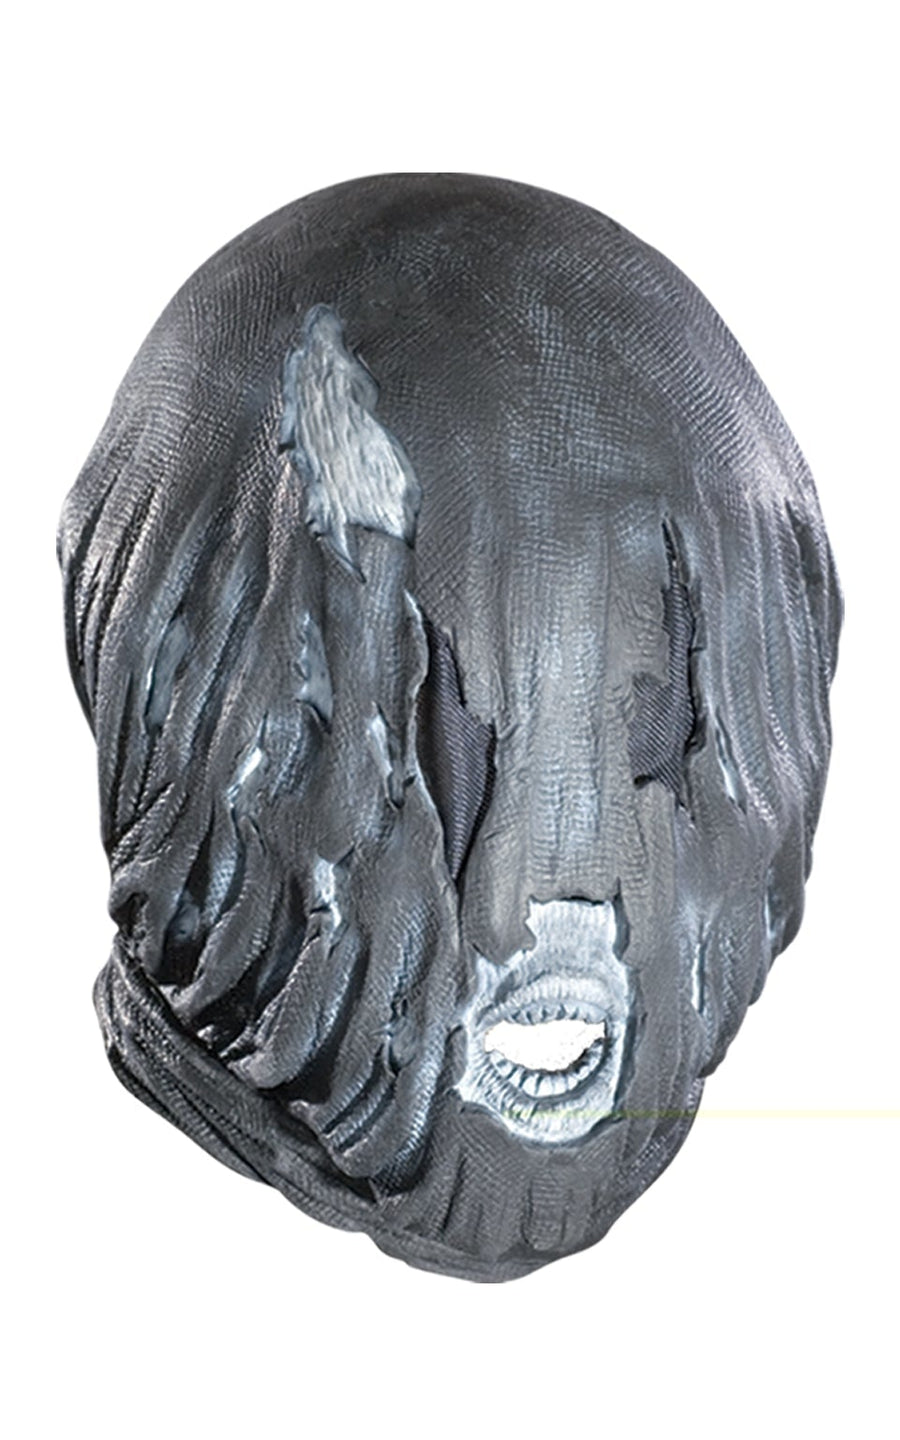 Dementor Deluxe Adult Mask Harry Potter_1